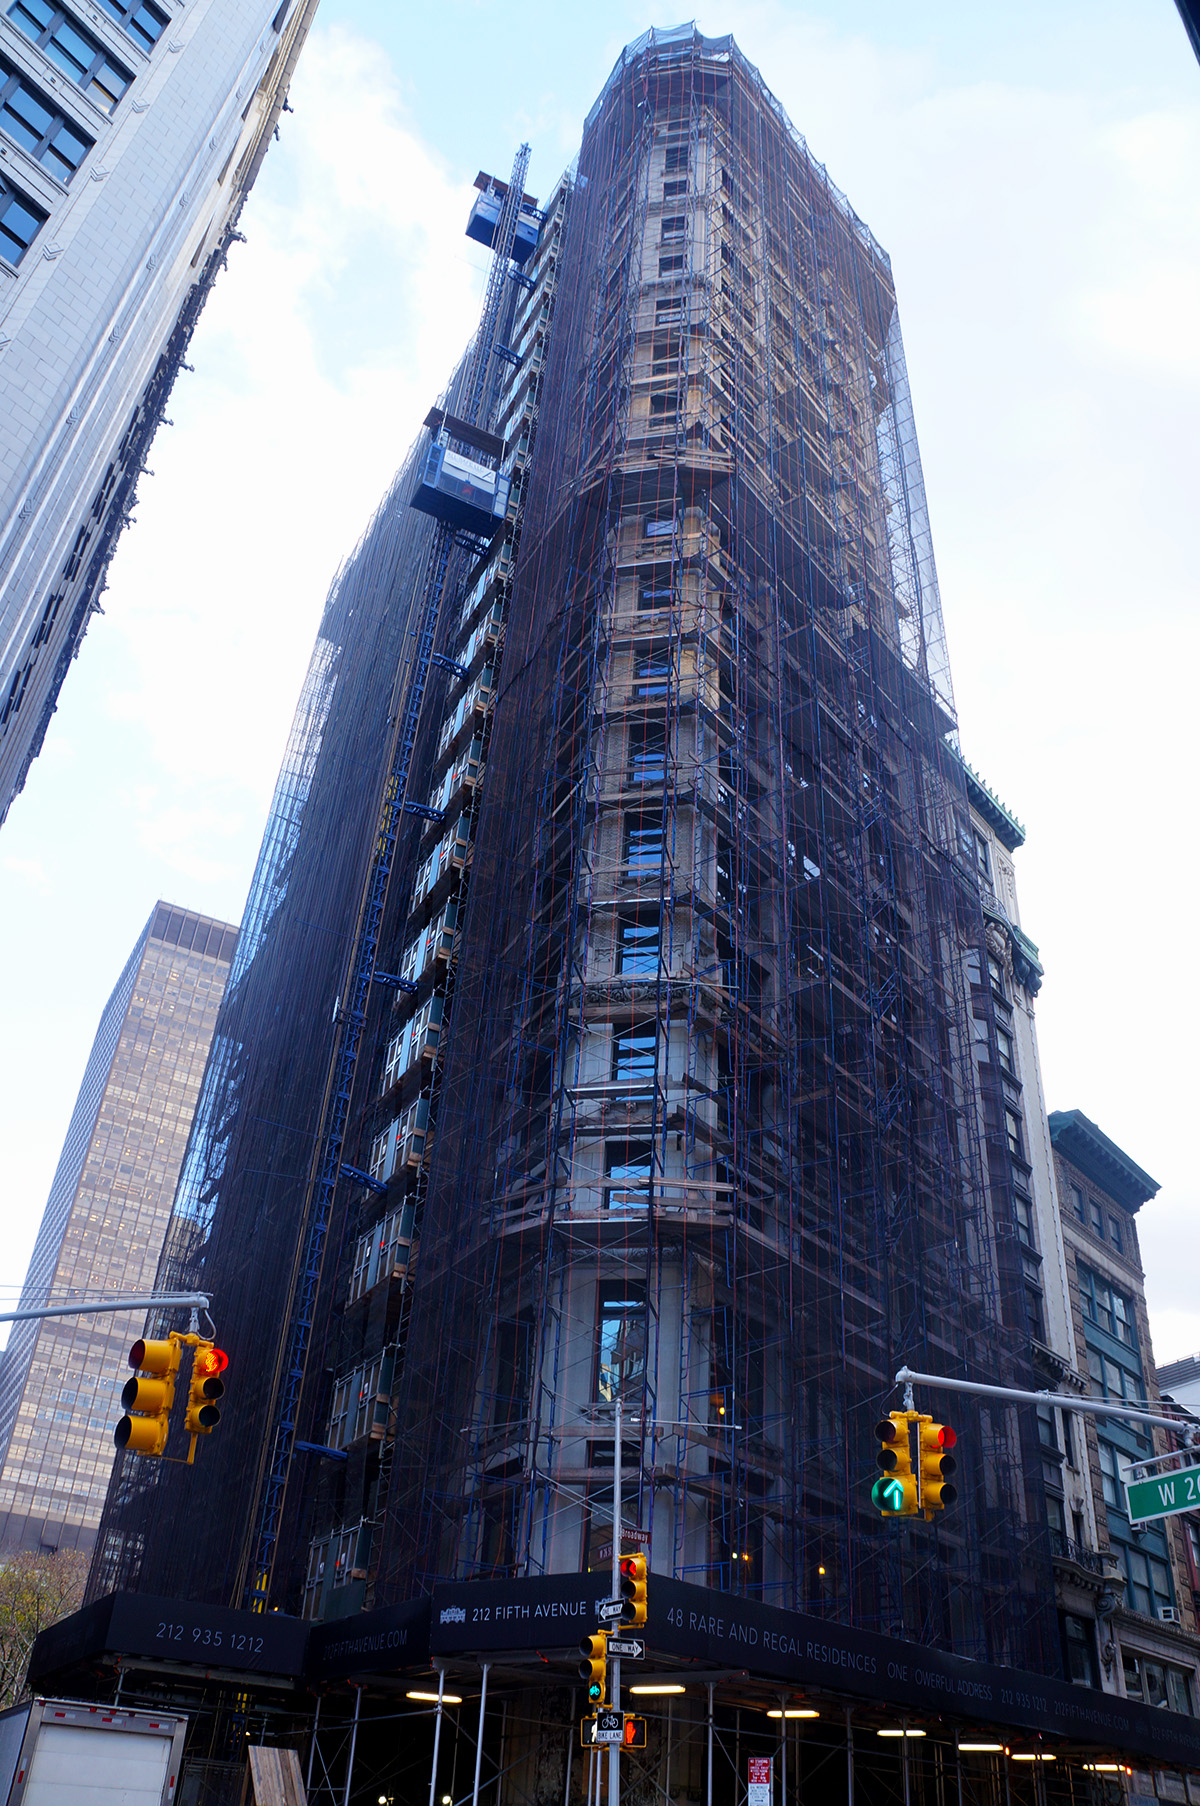 212 Fifth Avenue clad in scaffolding